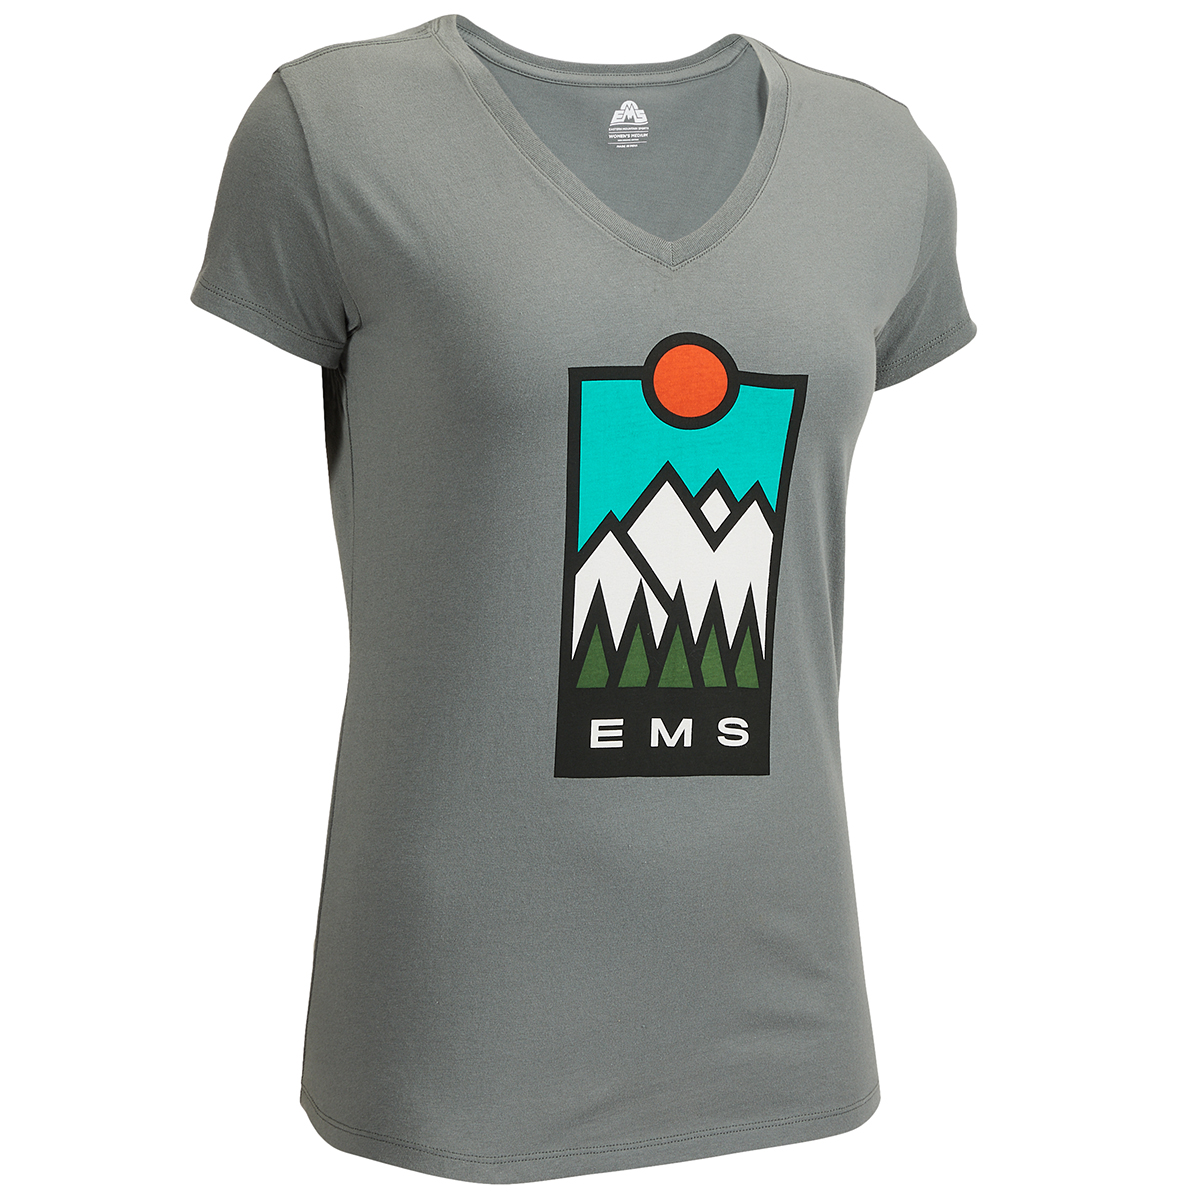 Ems Women's Short-Sleeve Graphic Tee - Green, S